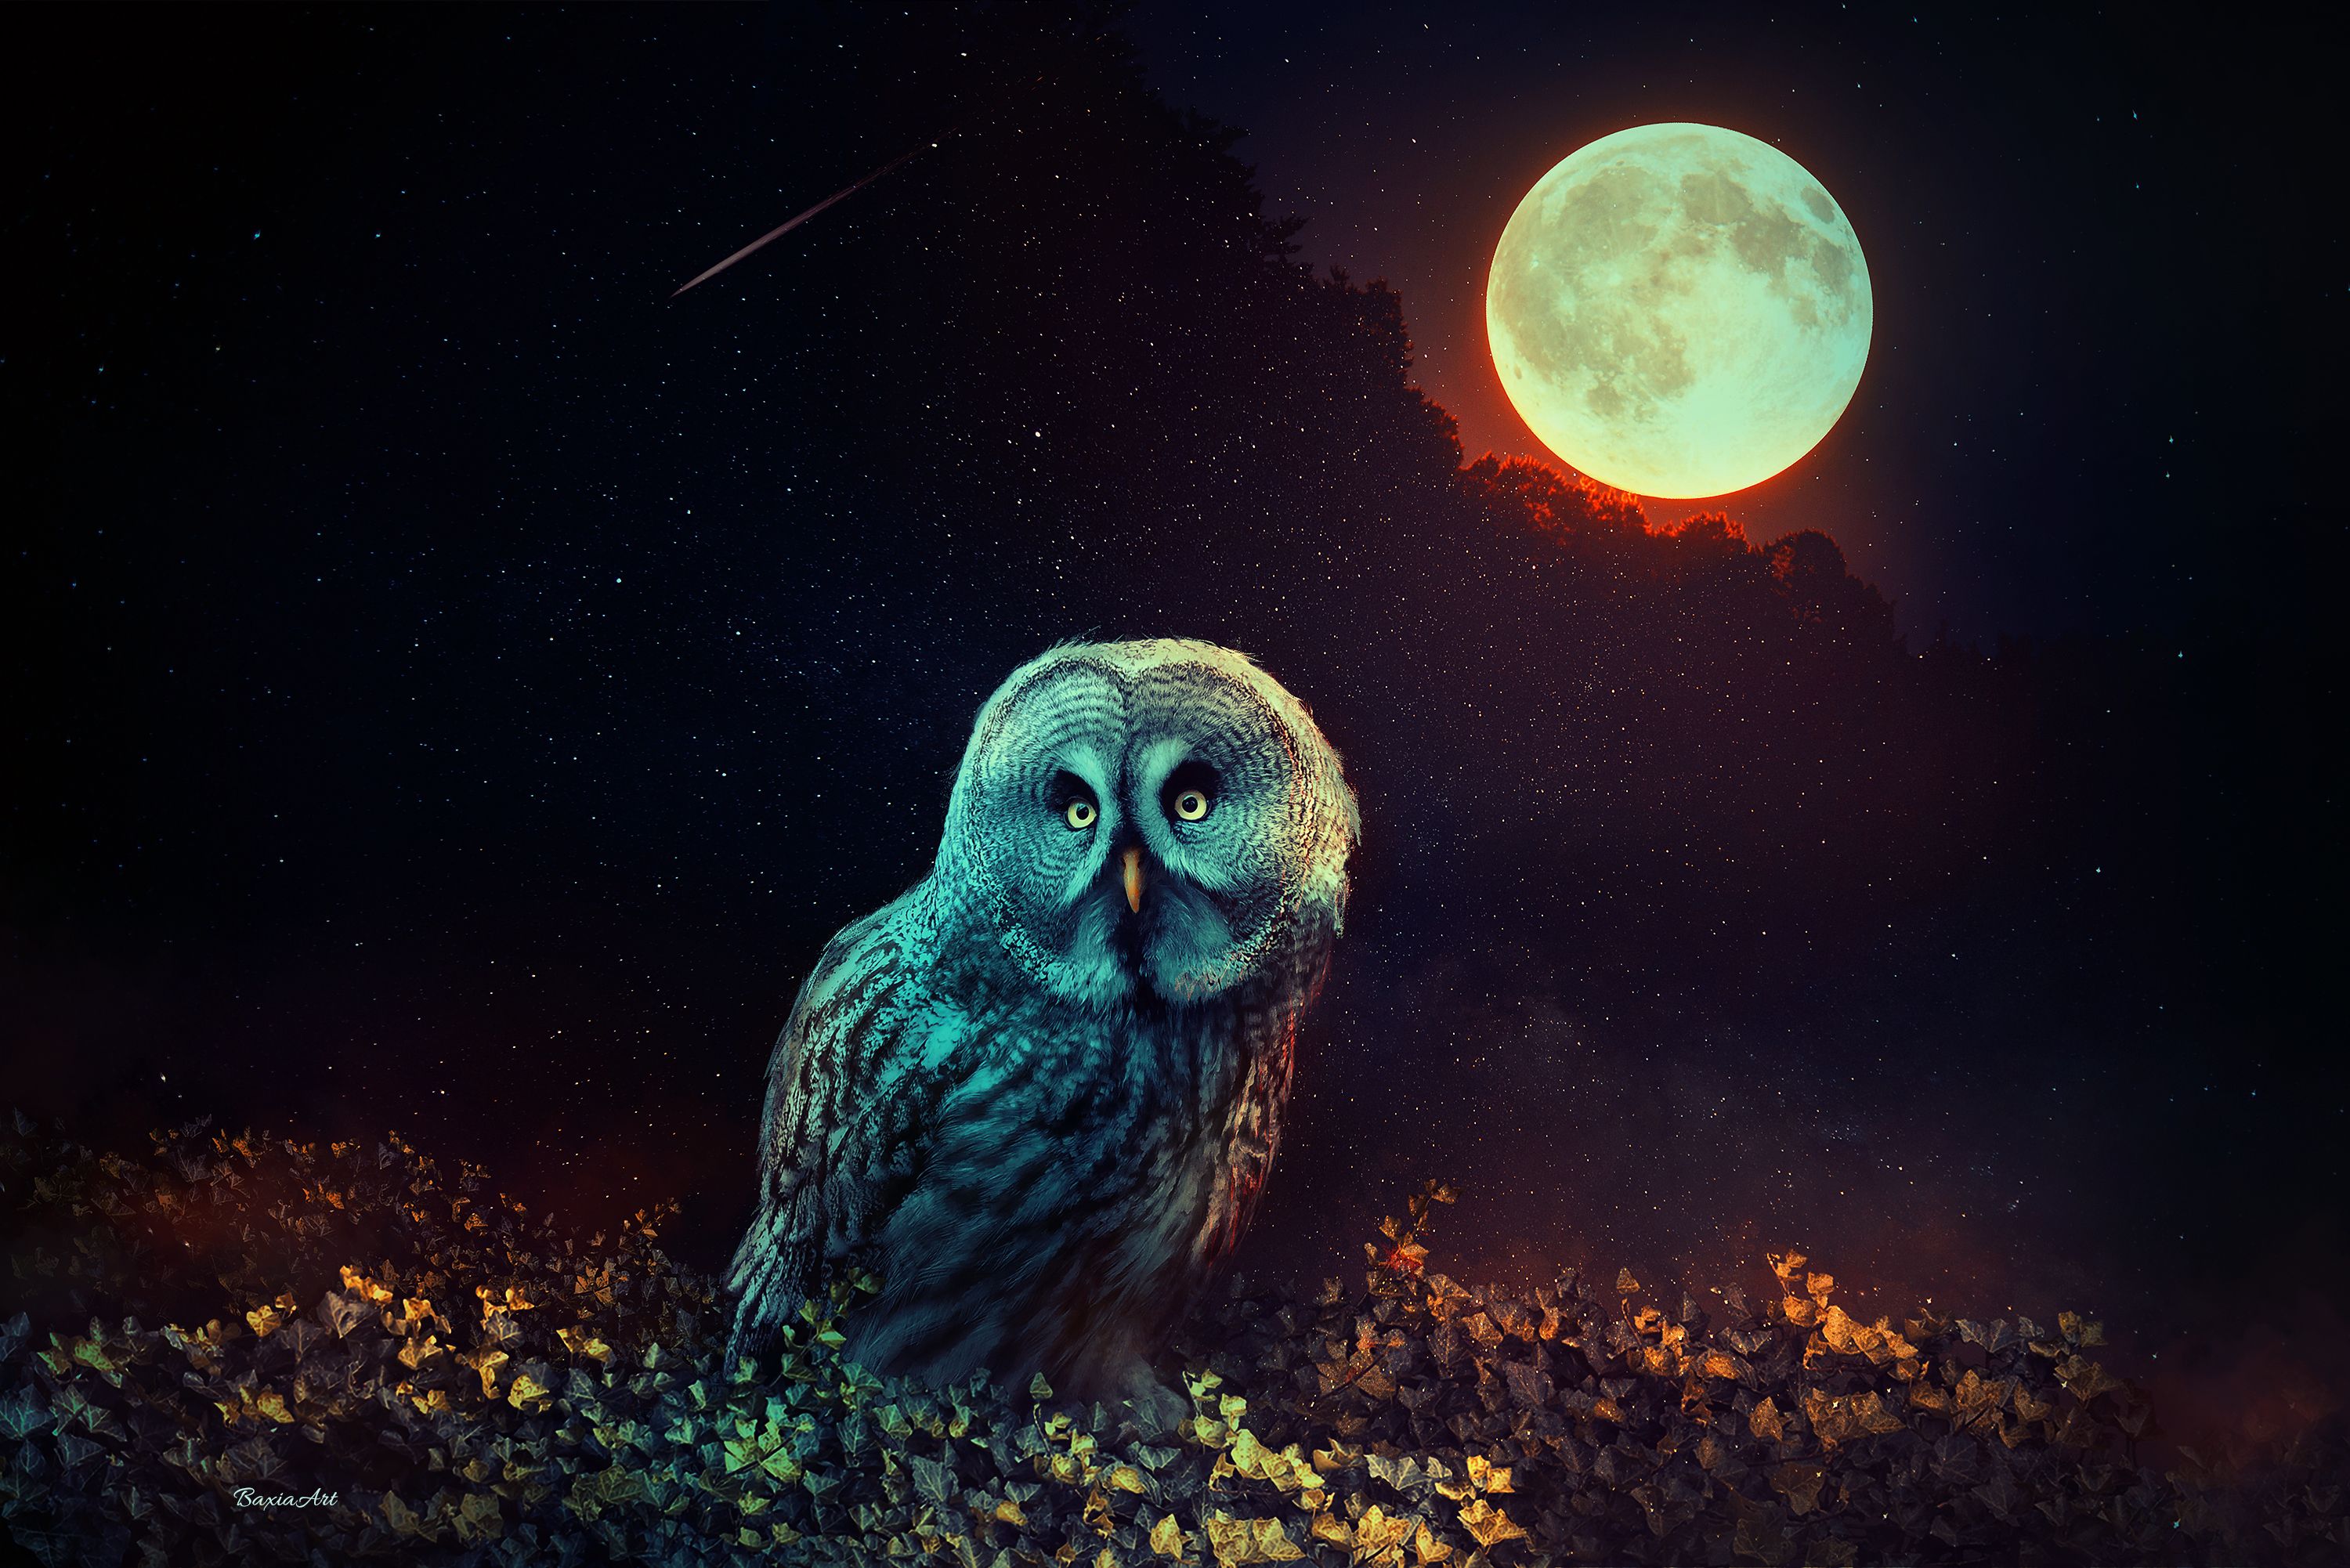 Jsou Aries Night Owls?